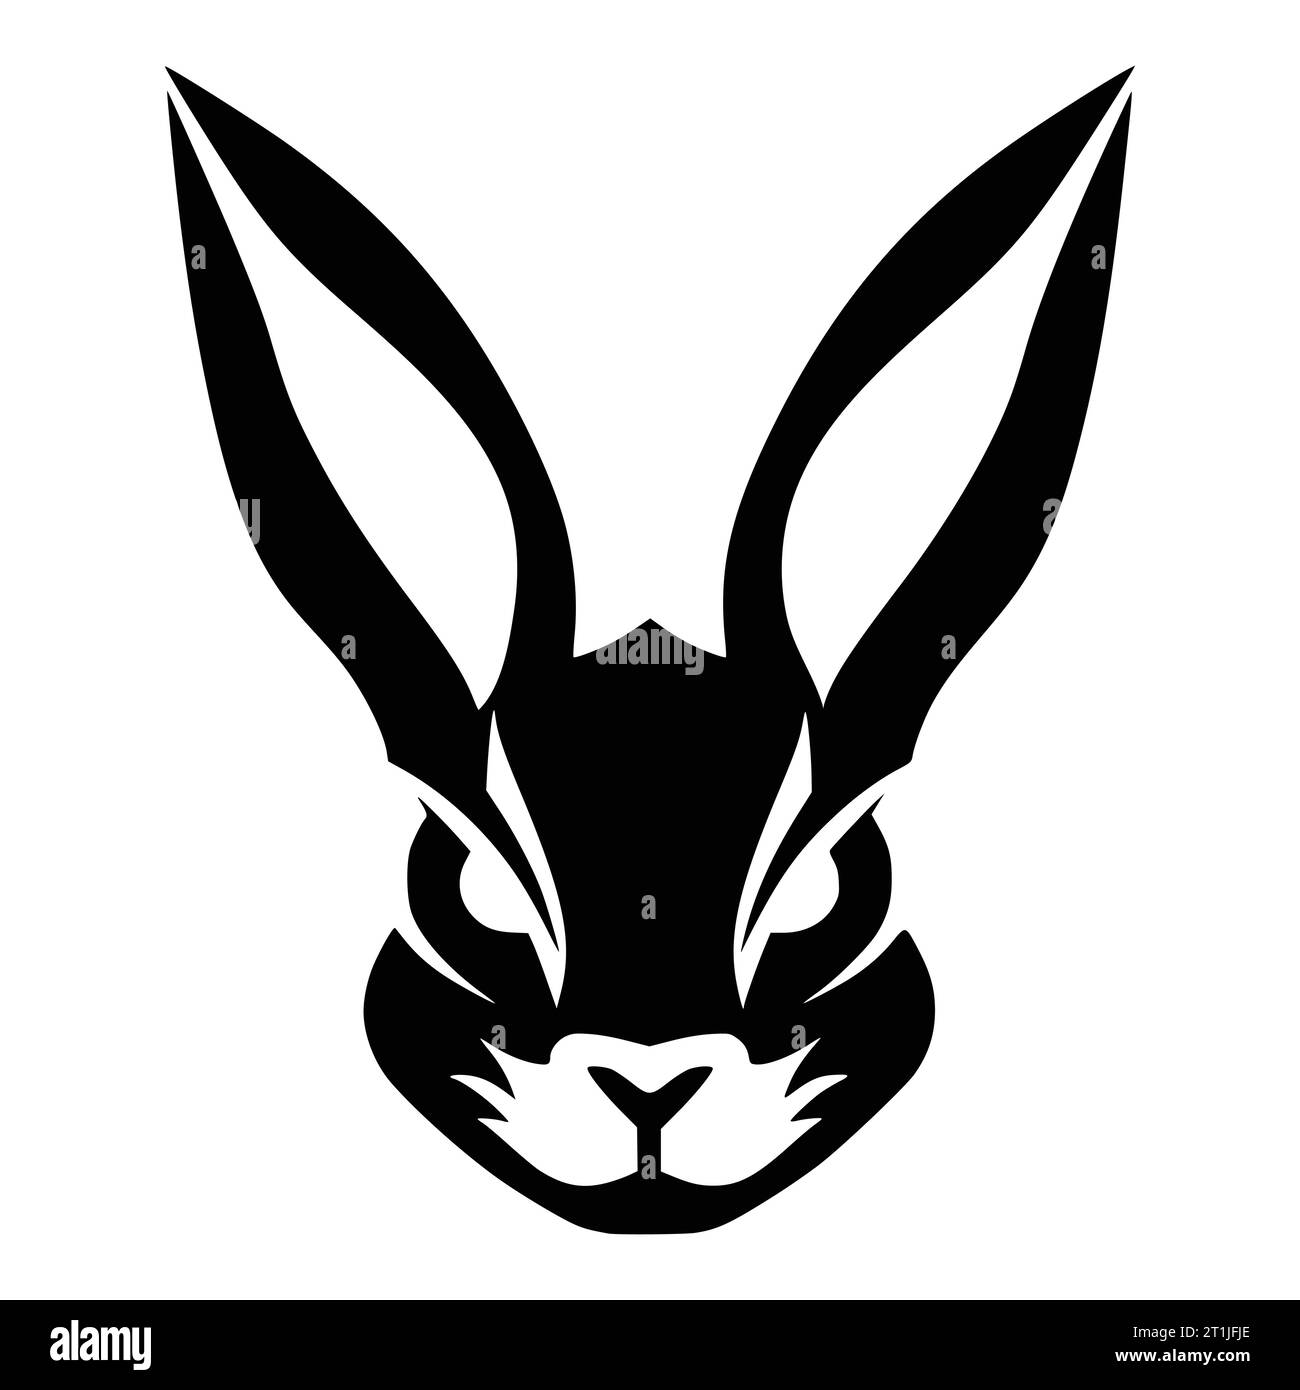 cool rabbit mammal wild animal head illustration for logo or symbol Stock Vector